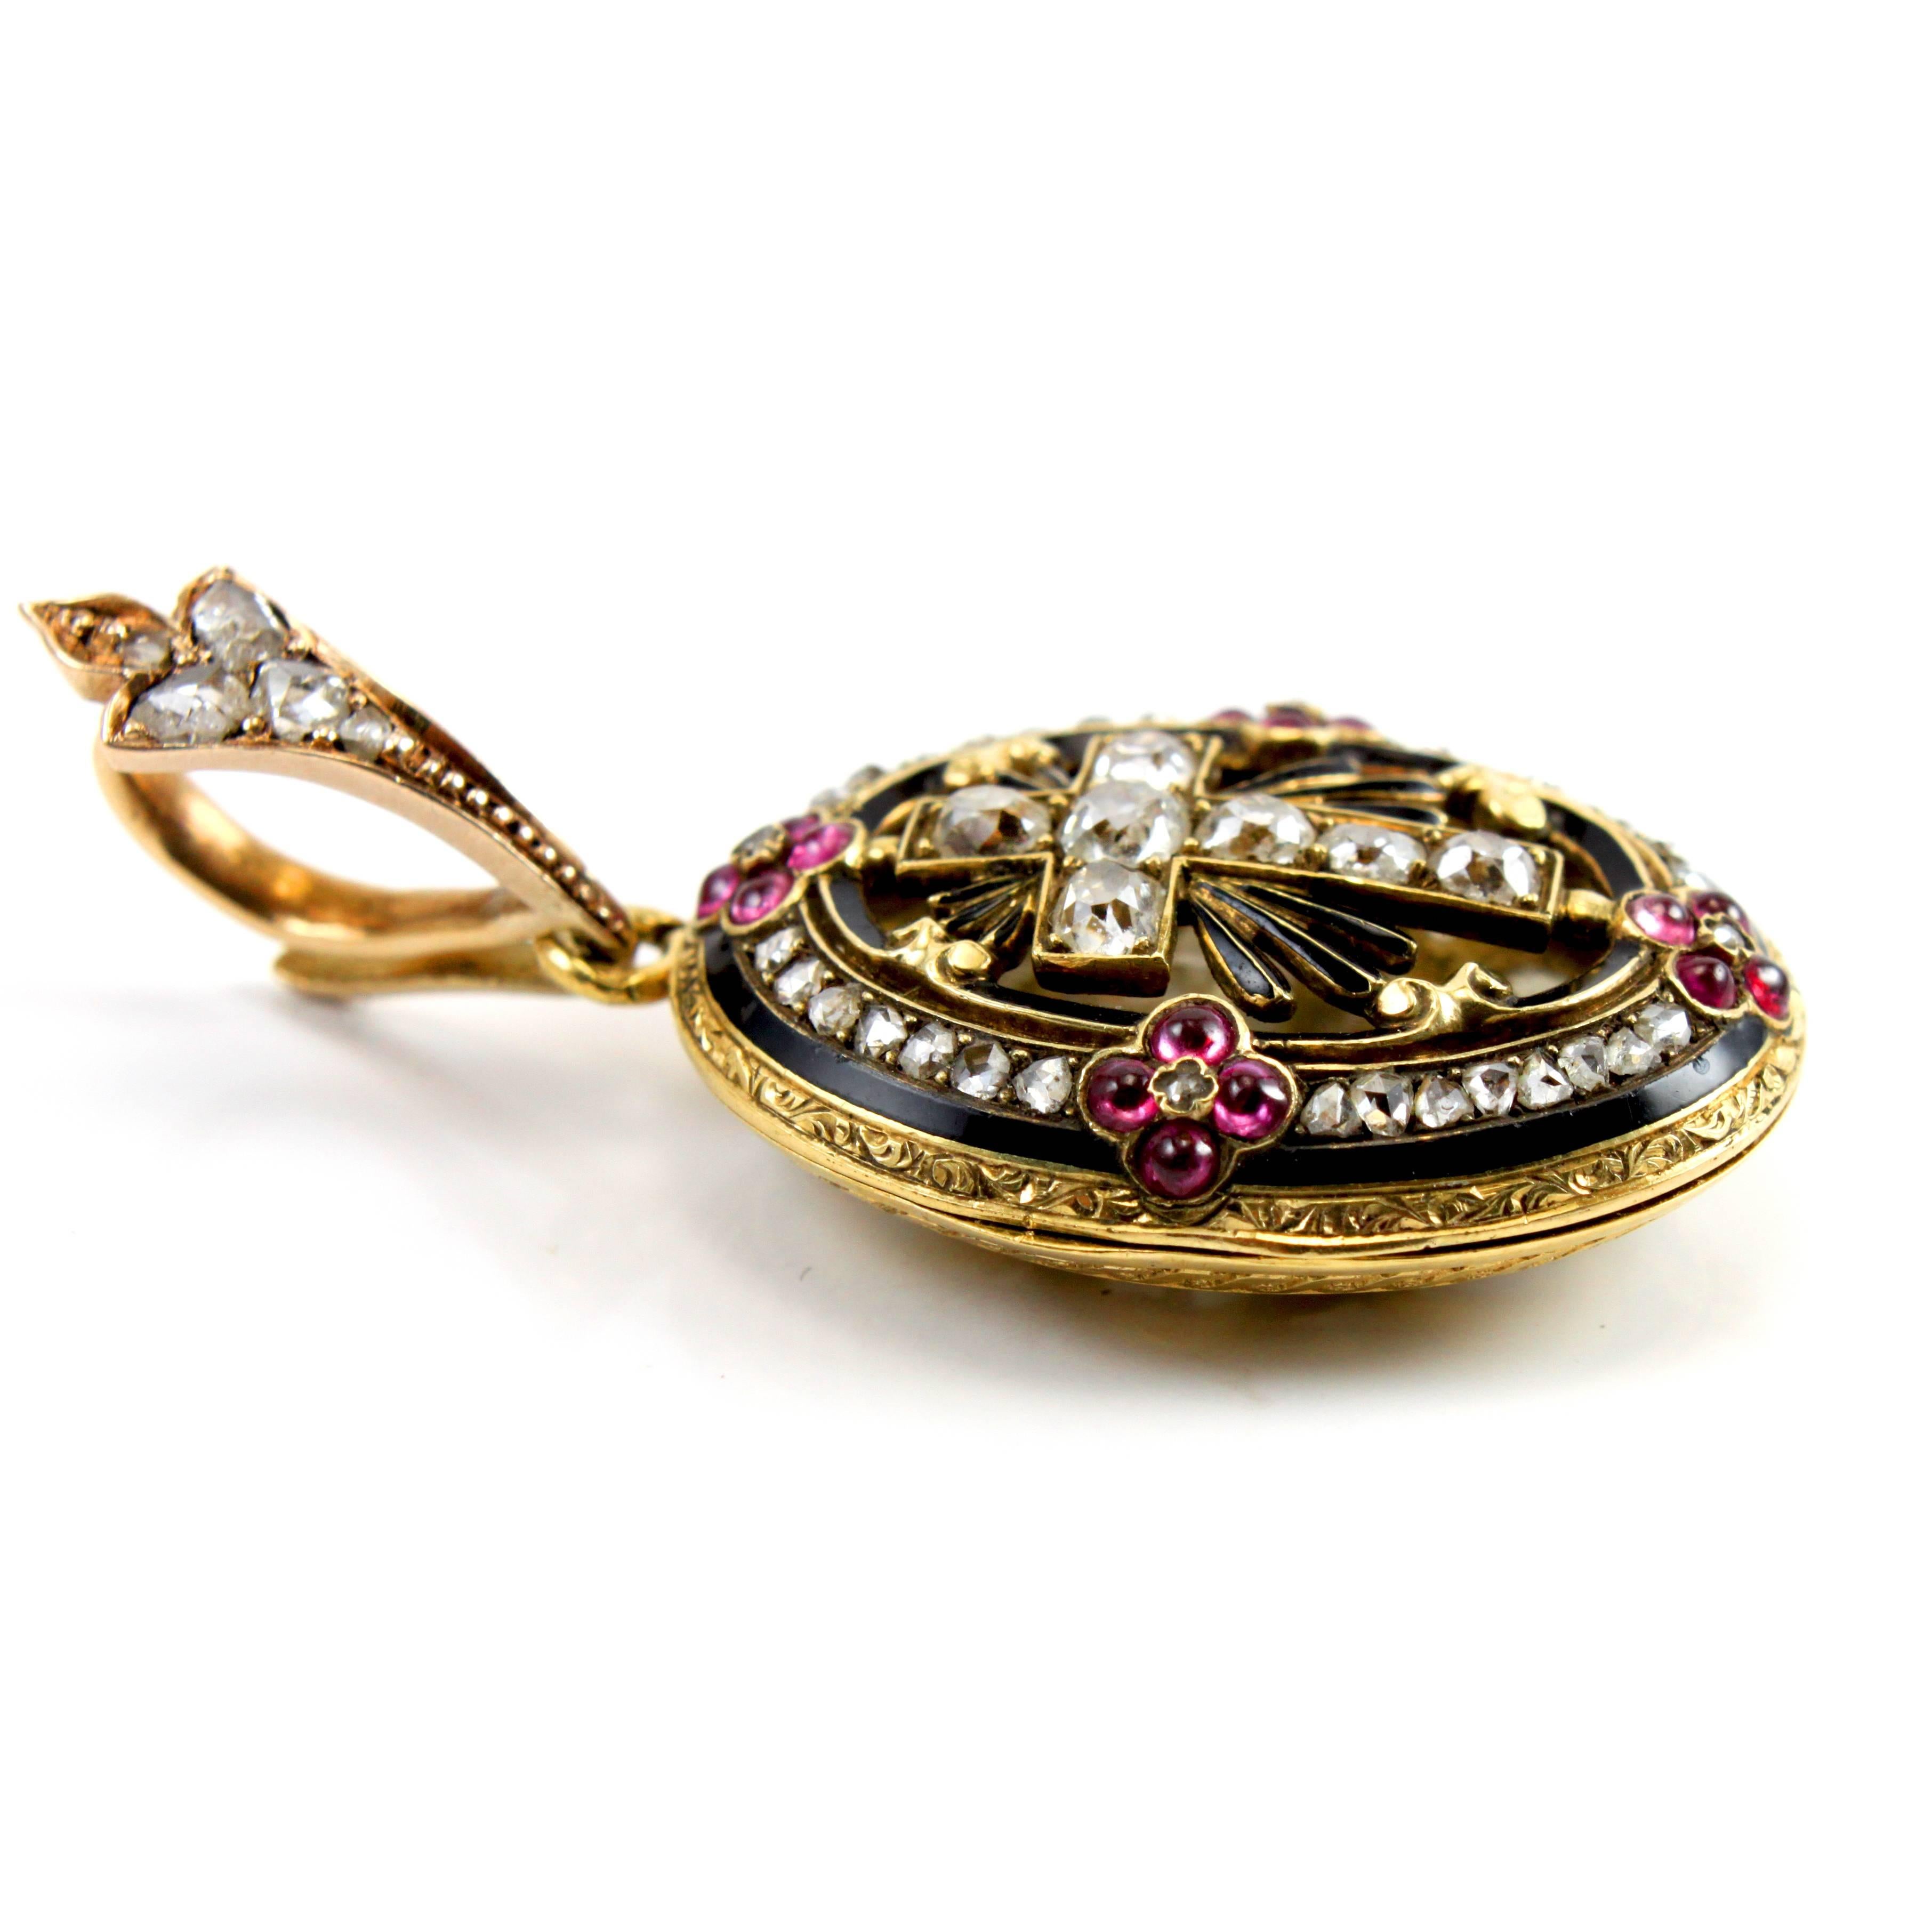 Women's or Men's 18K Yellow Gold Diamond and Ruby Cross Pendant Locket, circa 1860s